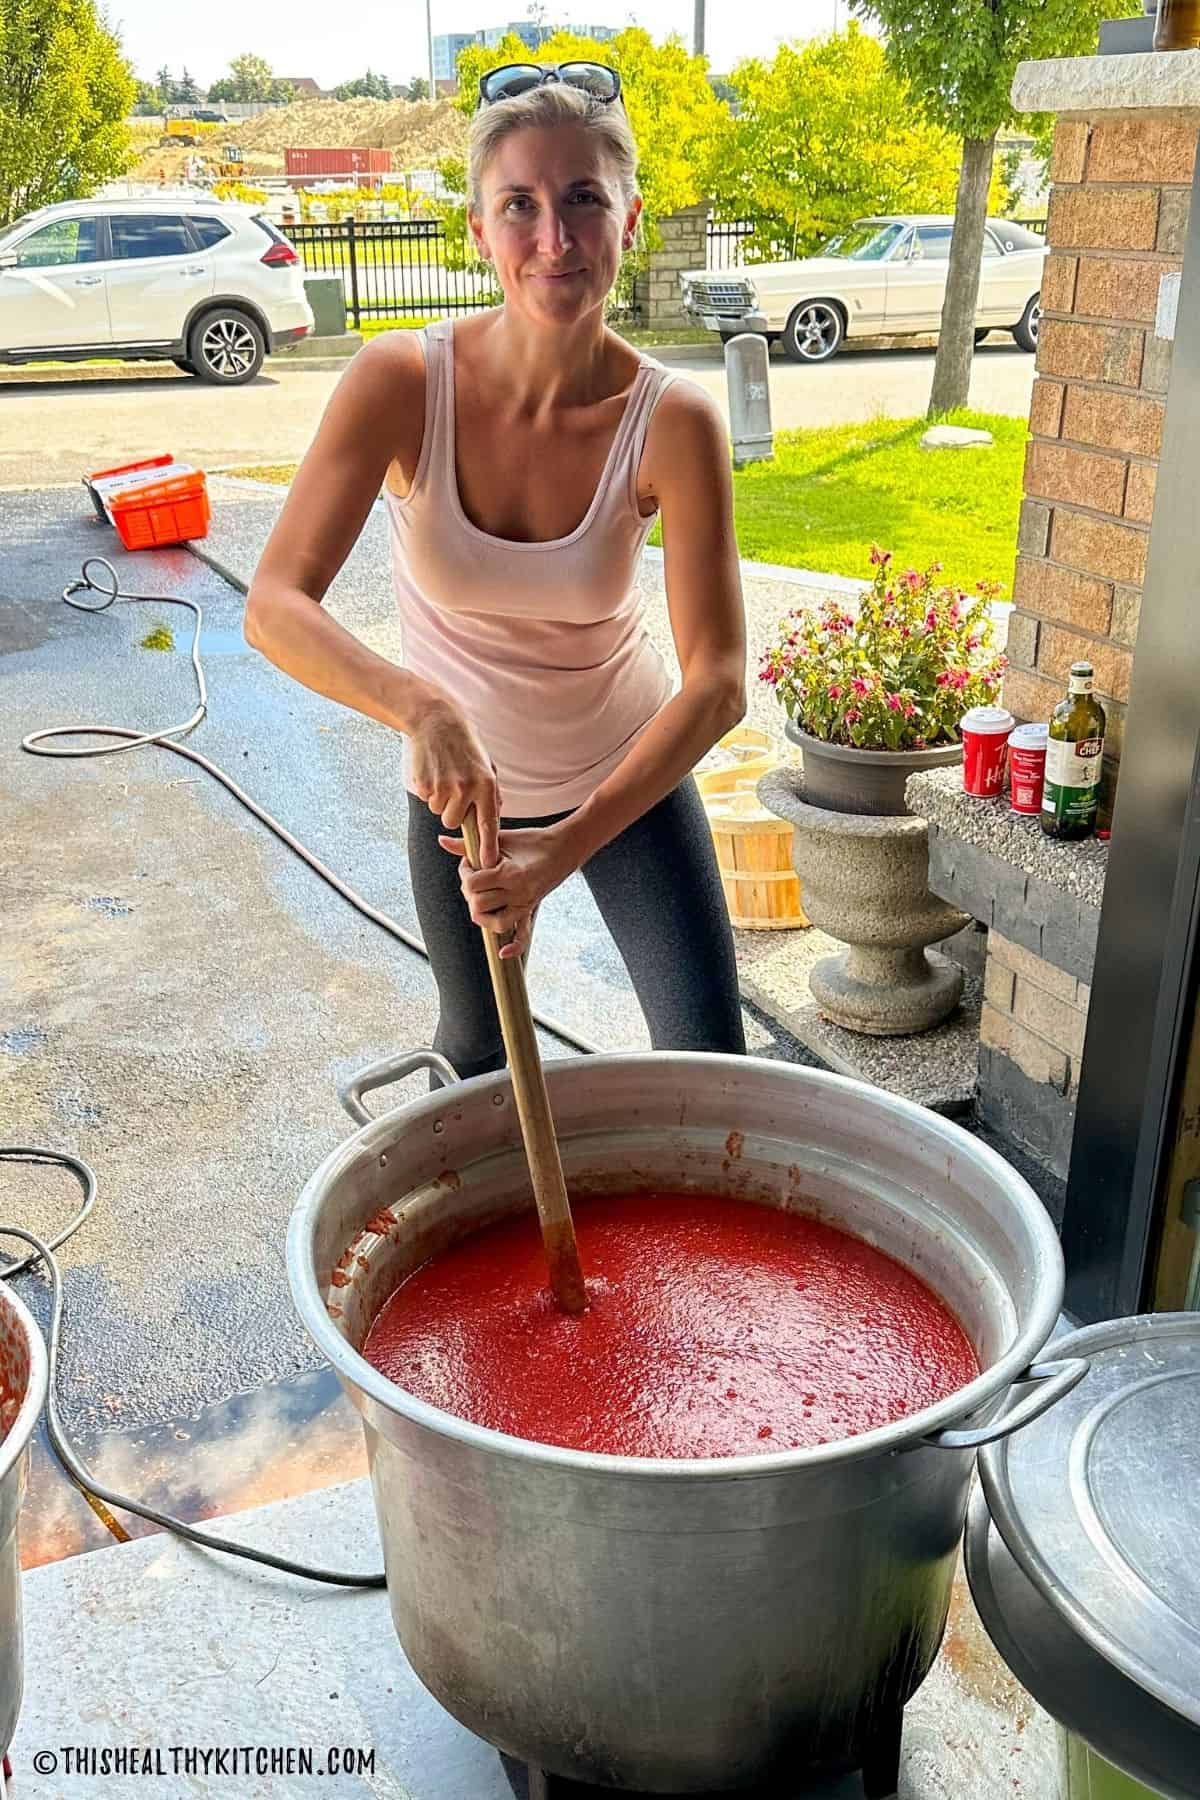 Woman stirring large pot of tomato sauce.